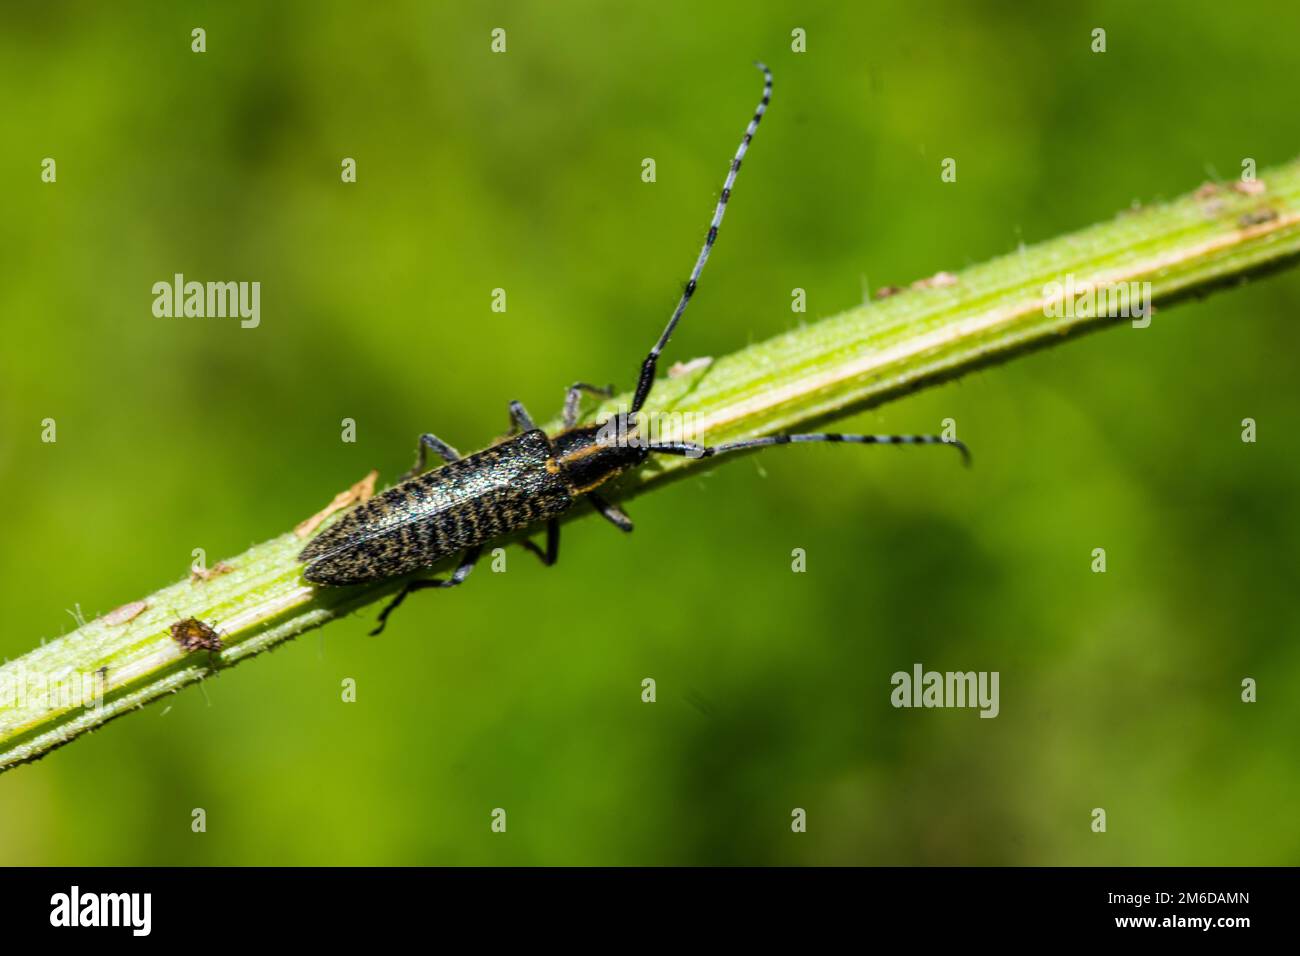 Longhorn beetle crawling on grass Stock Photo